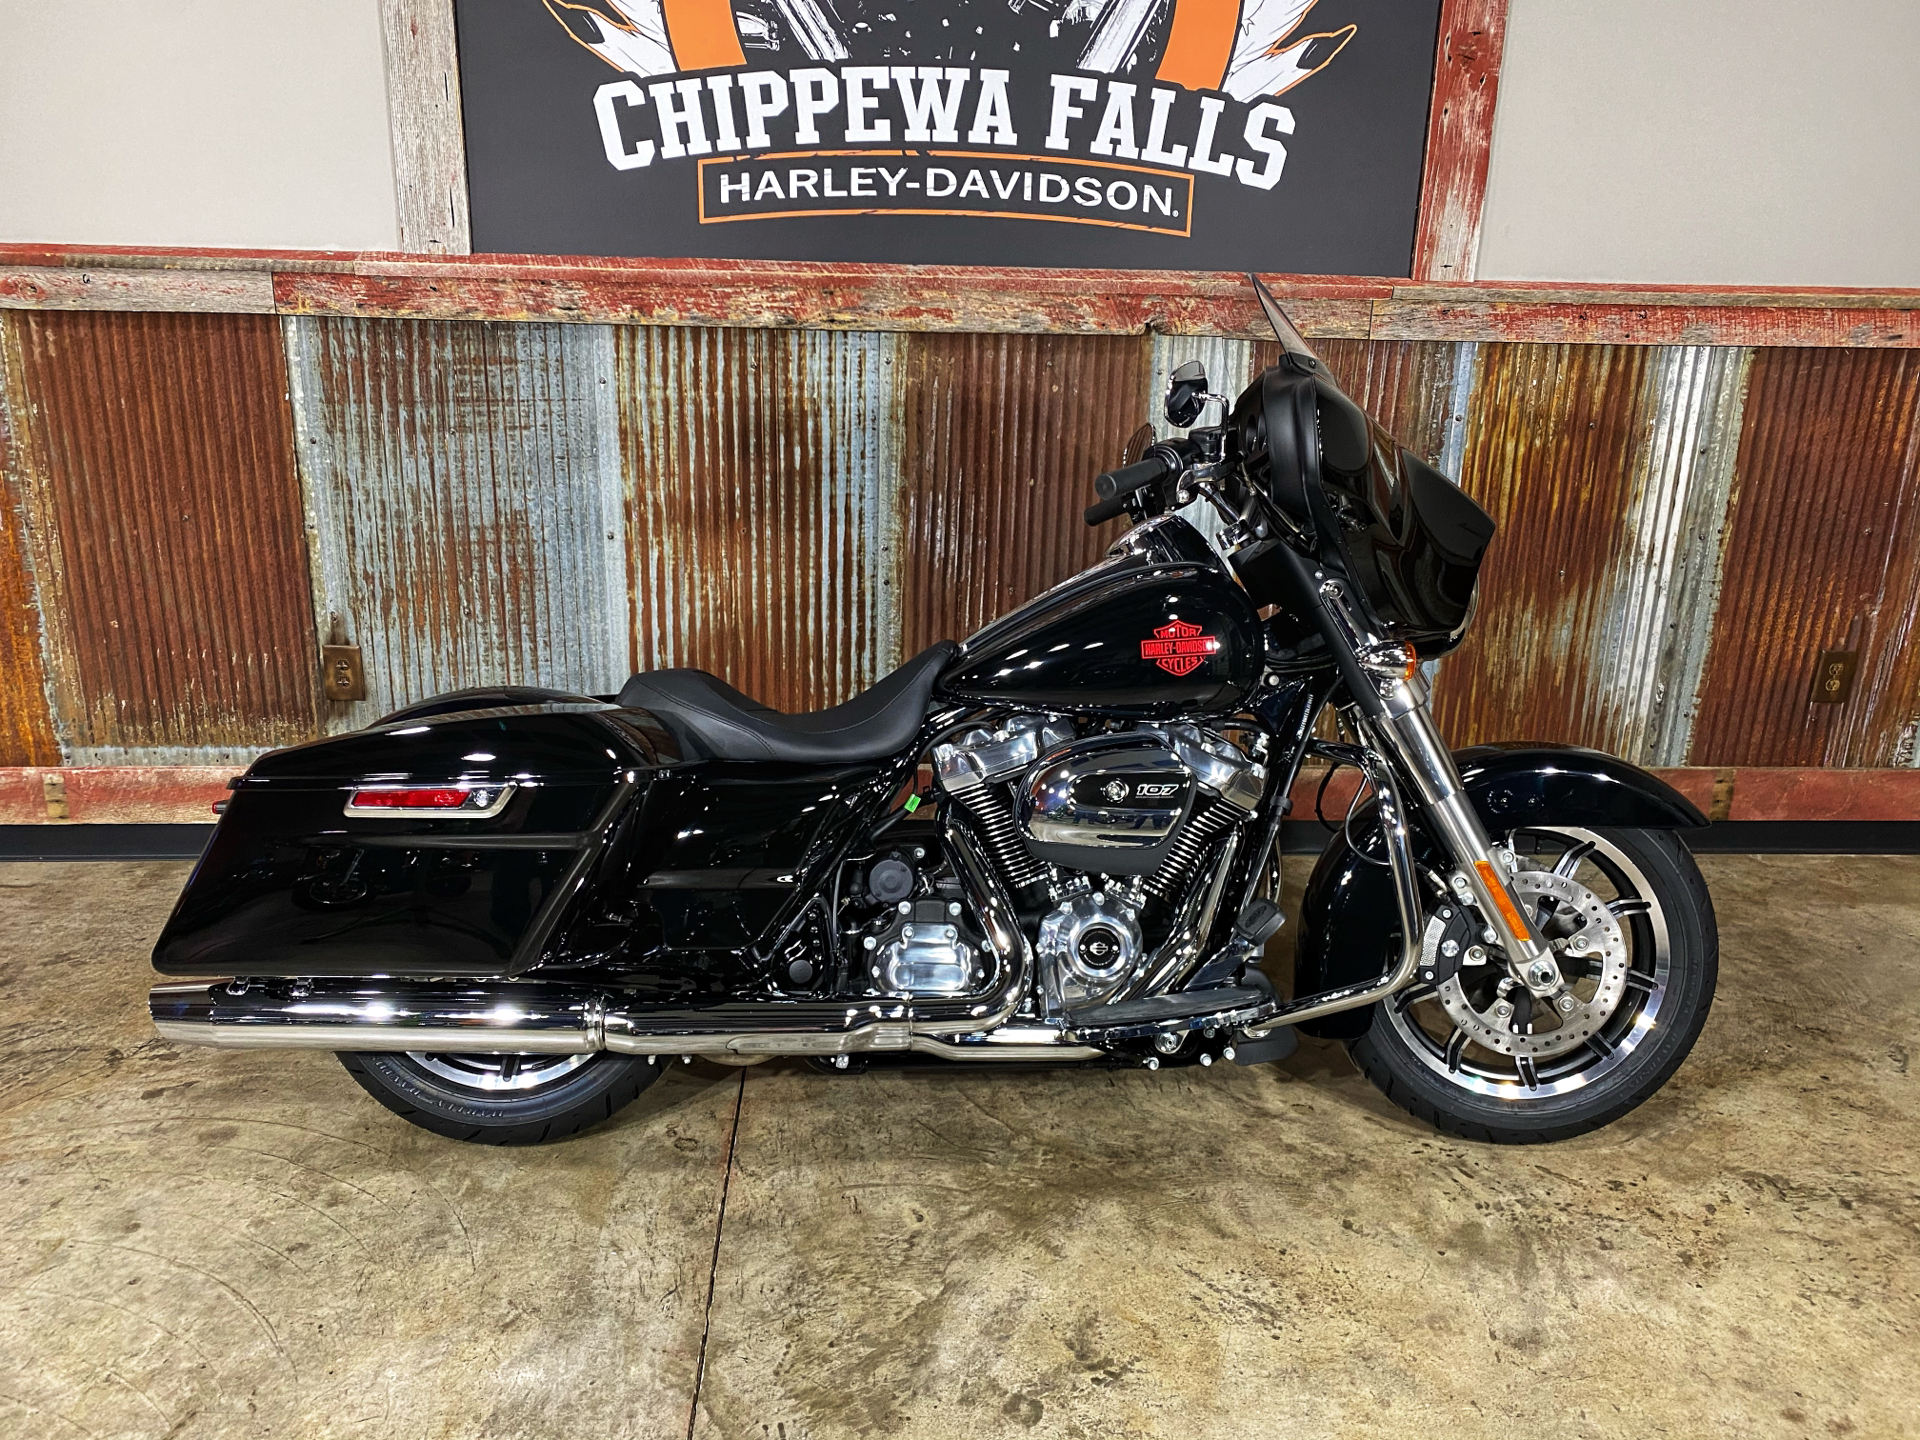 New 2021 Harley Davidson Electra Glide Standard Vivid Black Motorcycles In Chippewa Falls Wi Fl612512